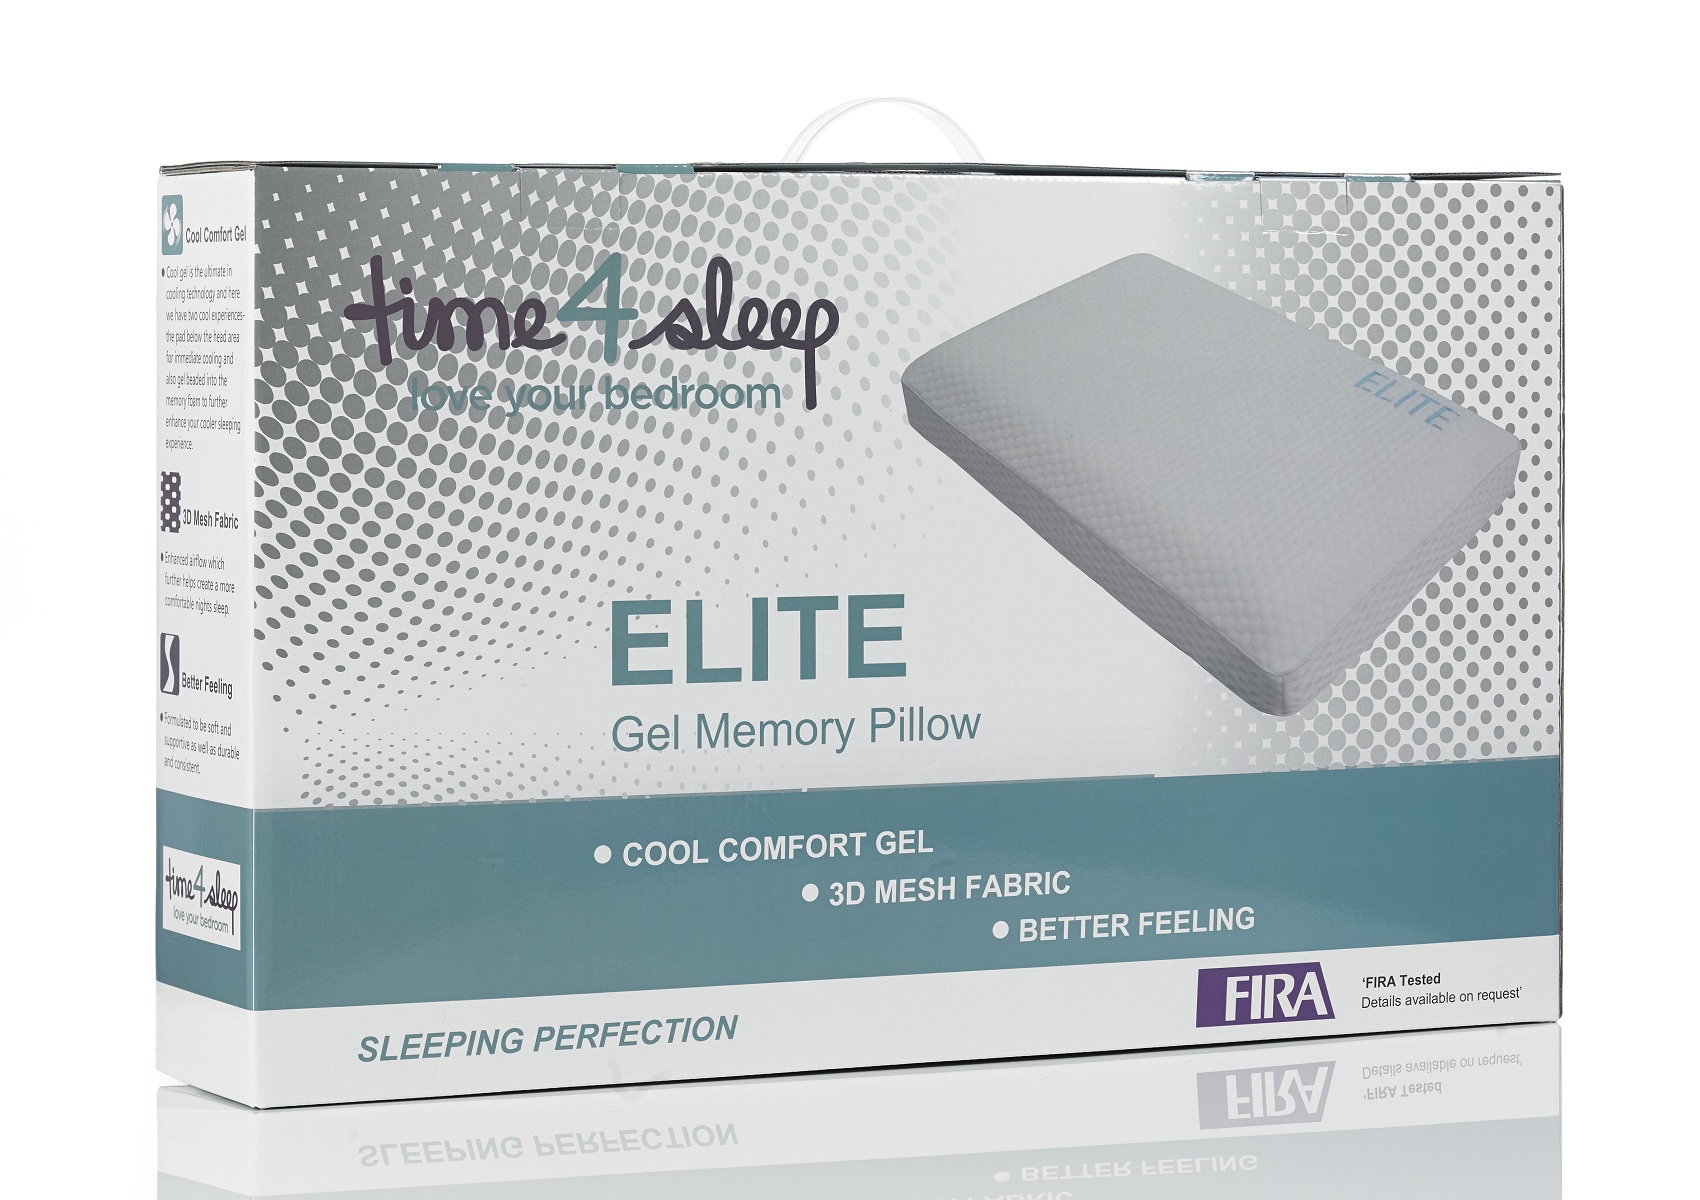 View Elite Gel Memory Pillow Time4Sleep information